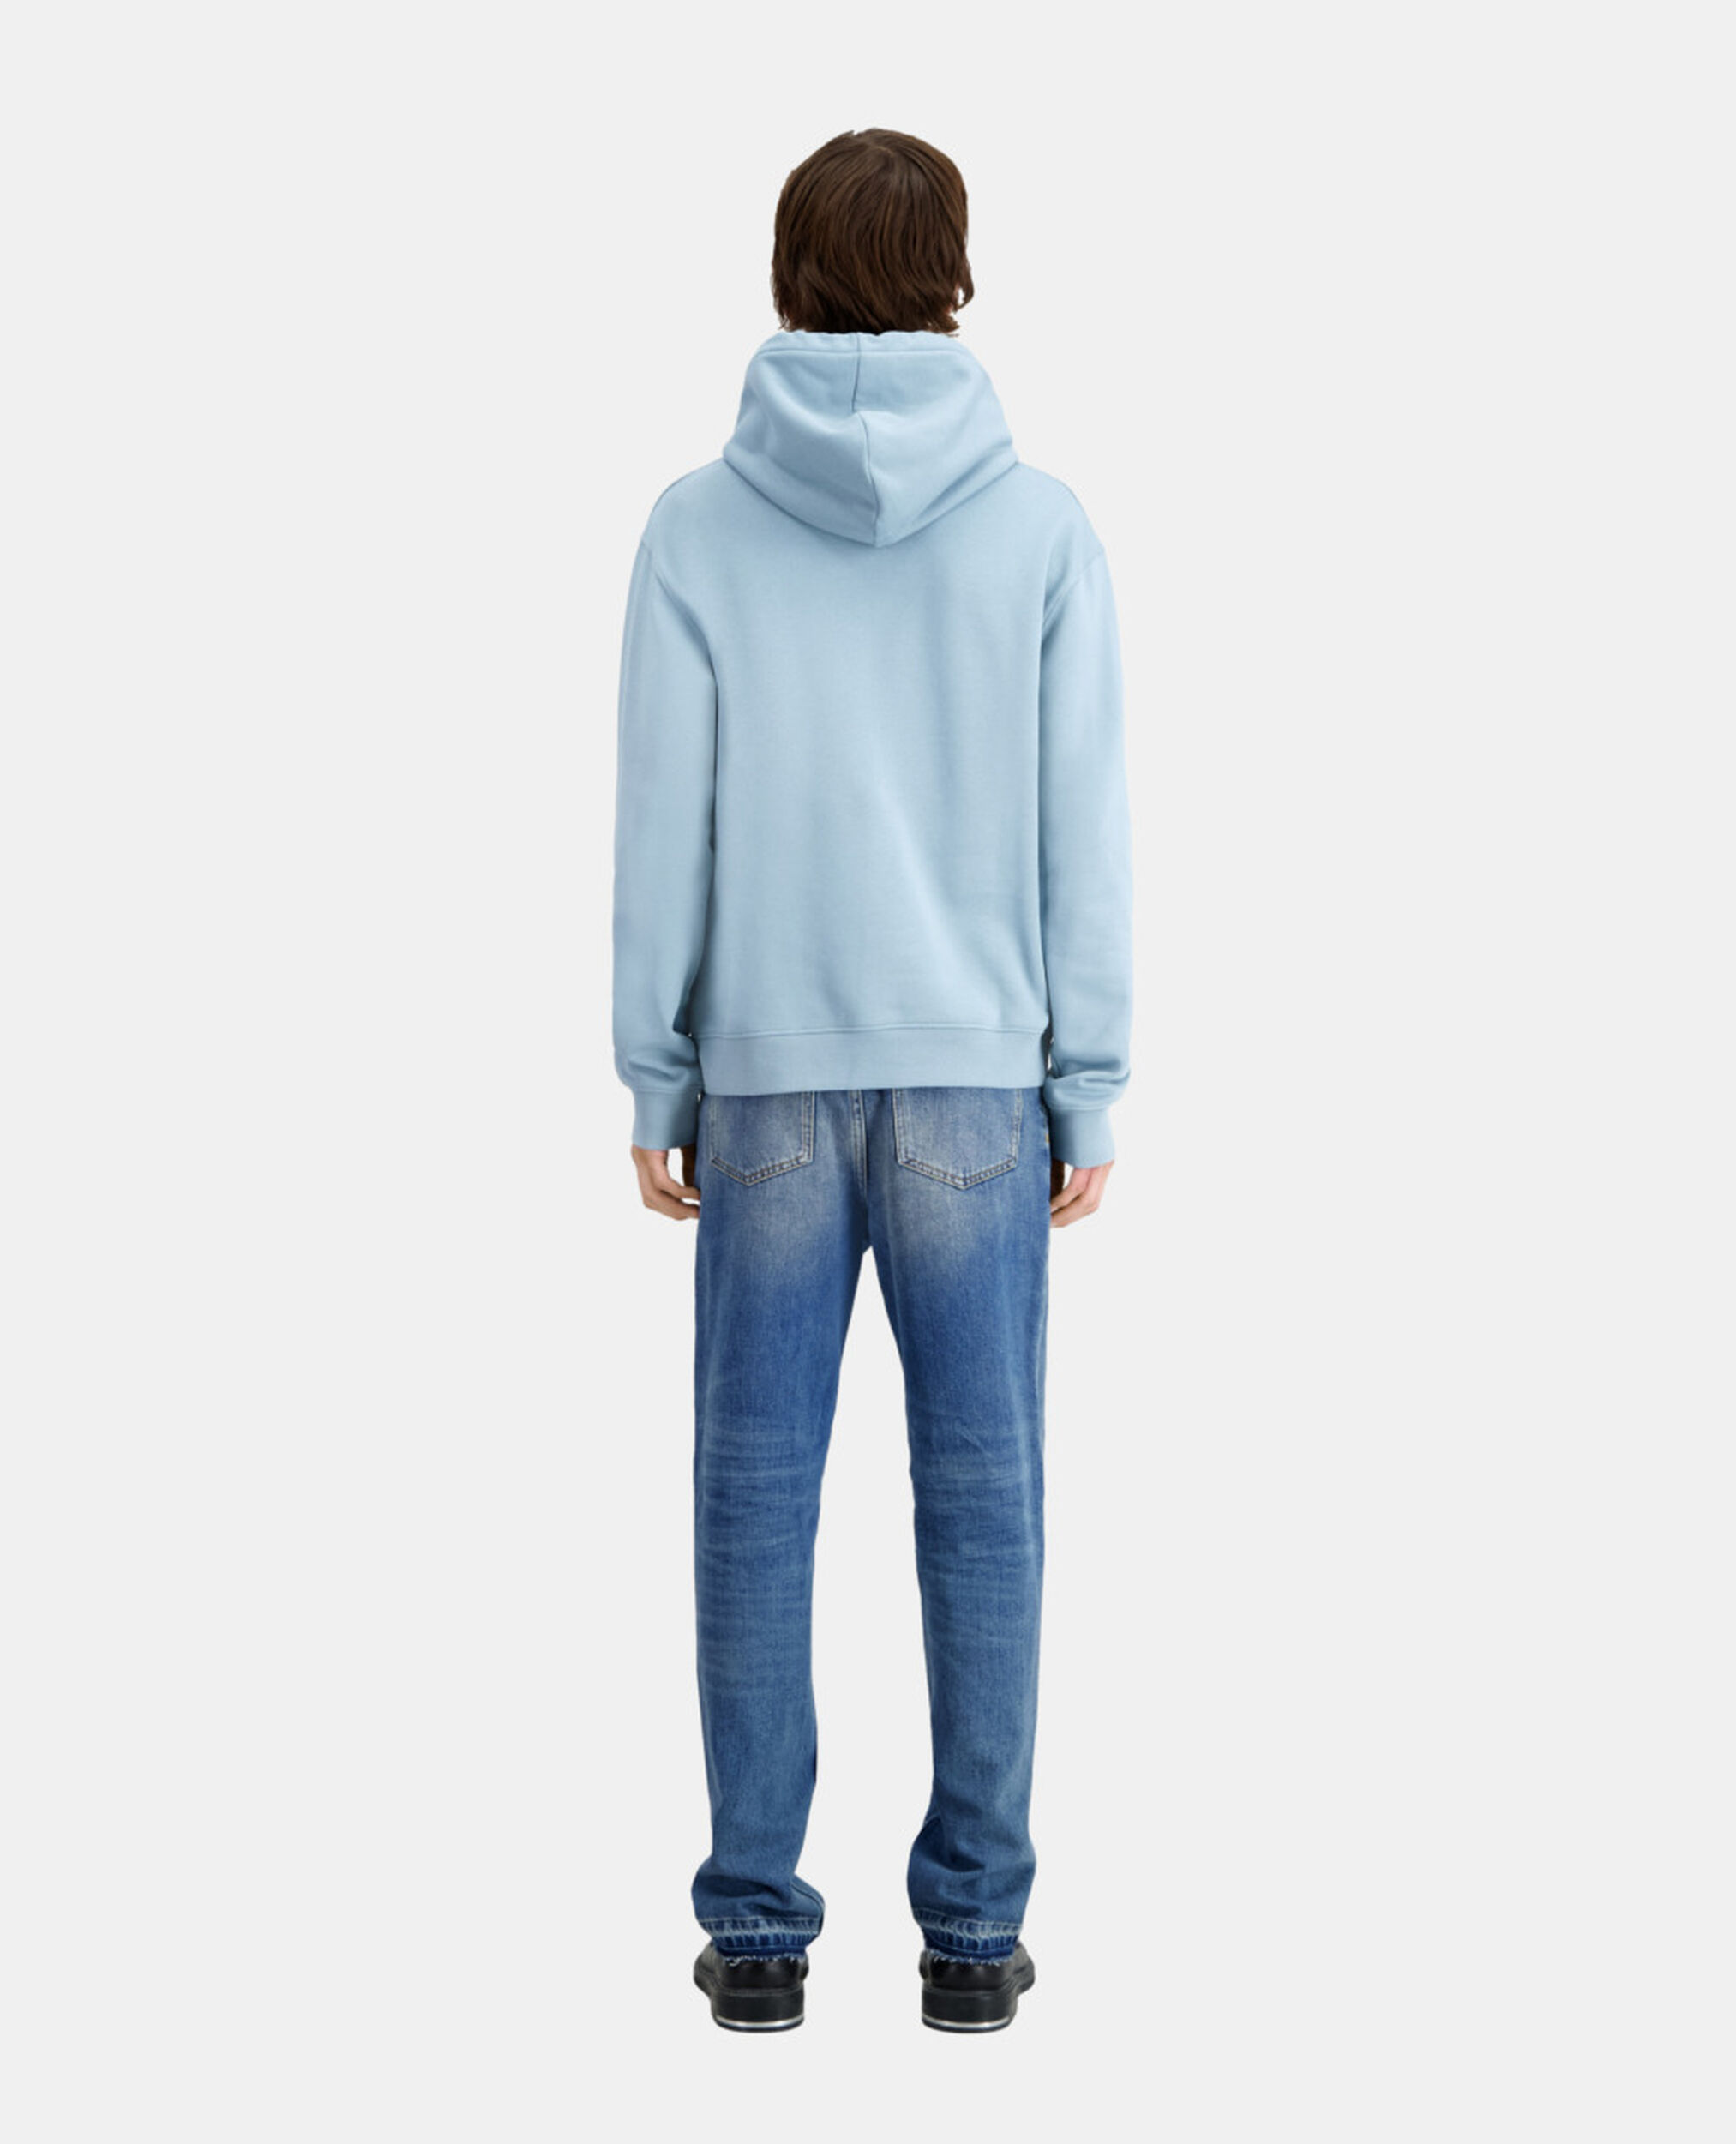 Sweatshirt Homme à capuche bleu avec logo, BLUE GREY, hi-res image number null